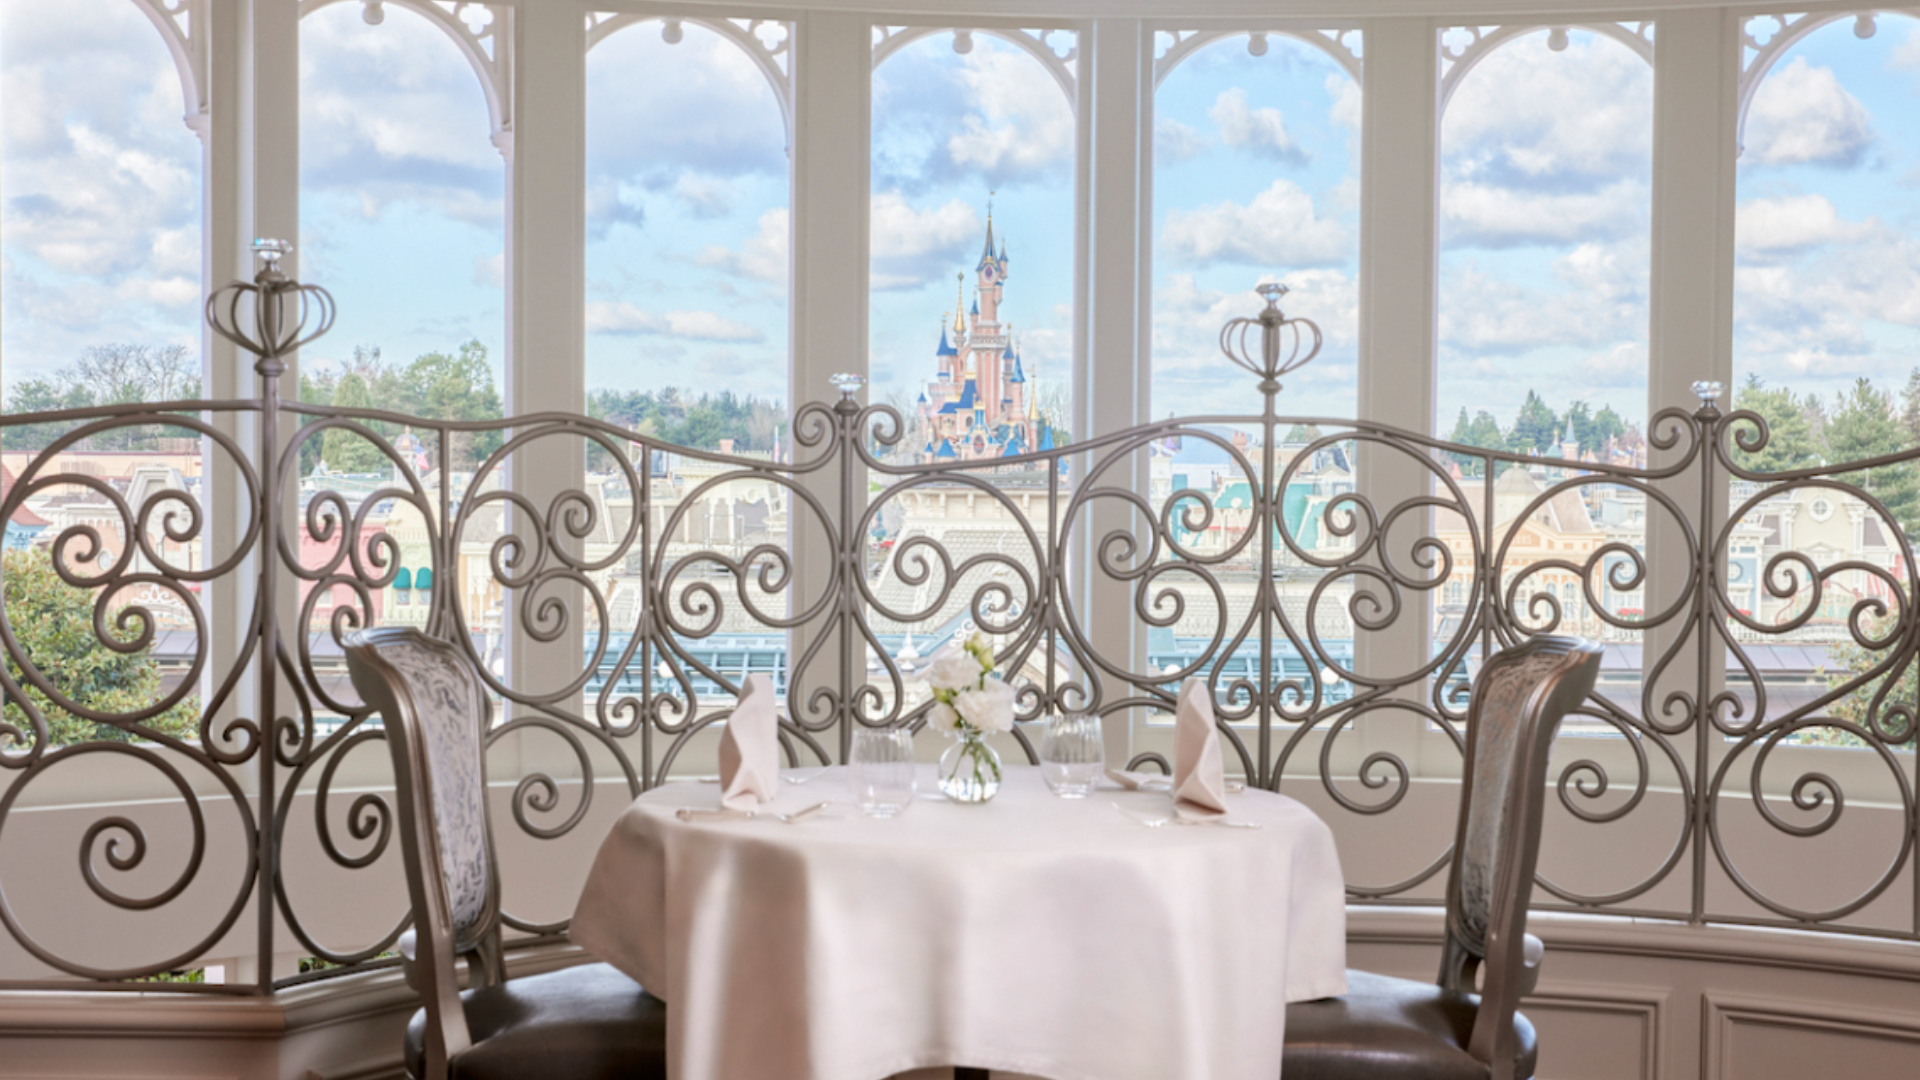 Le Castle Club du Disneyland Hotel - disneylandparis-news